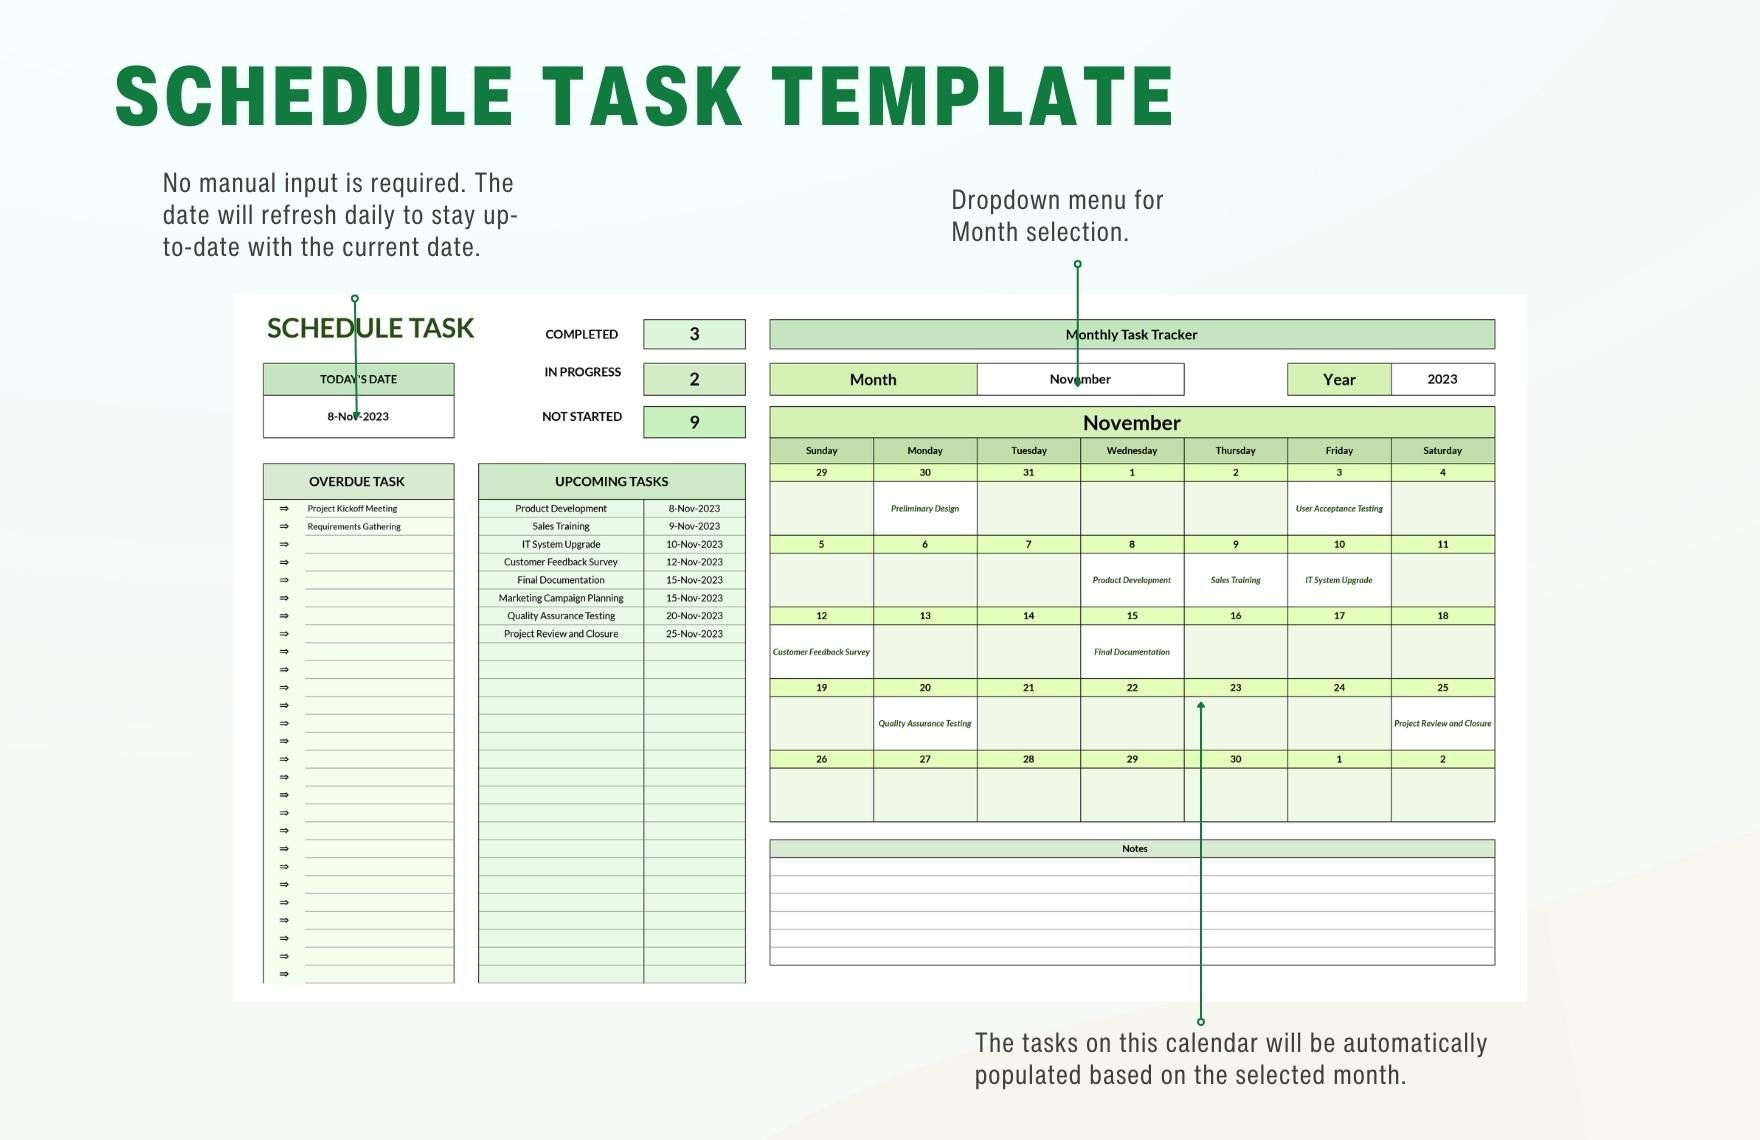 Schedule Task Template